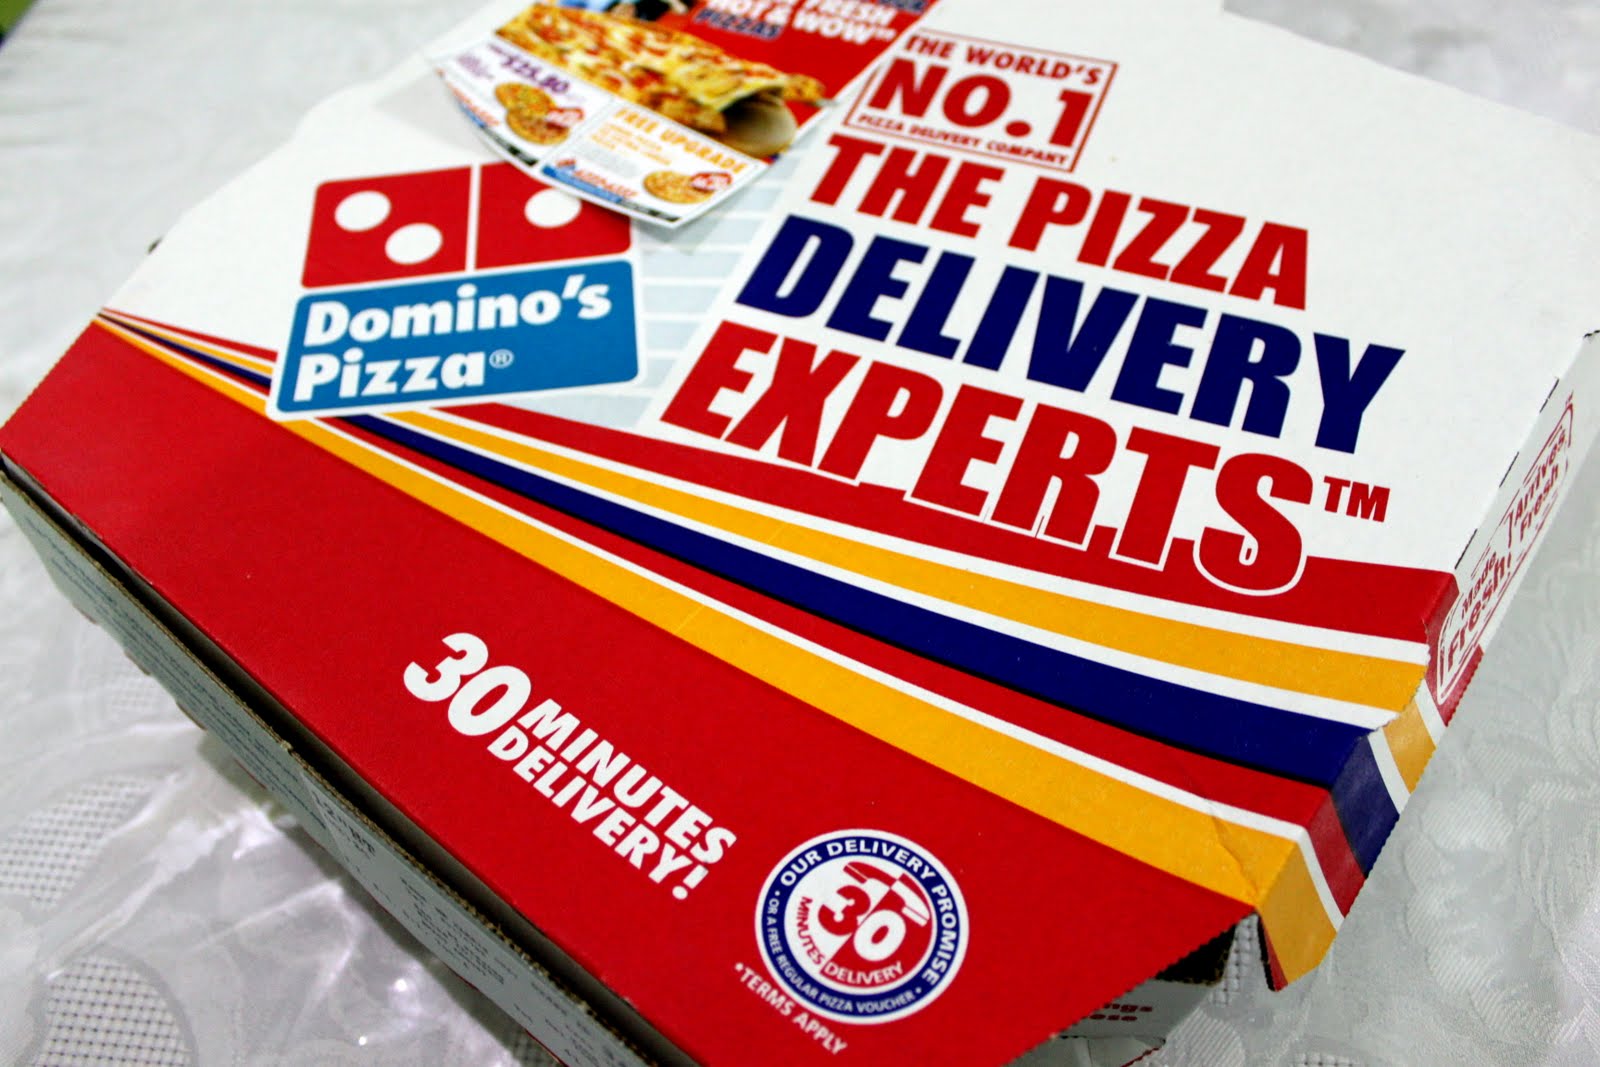 *the simplest aphrodisiac: Domino's Pizza